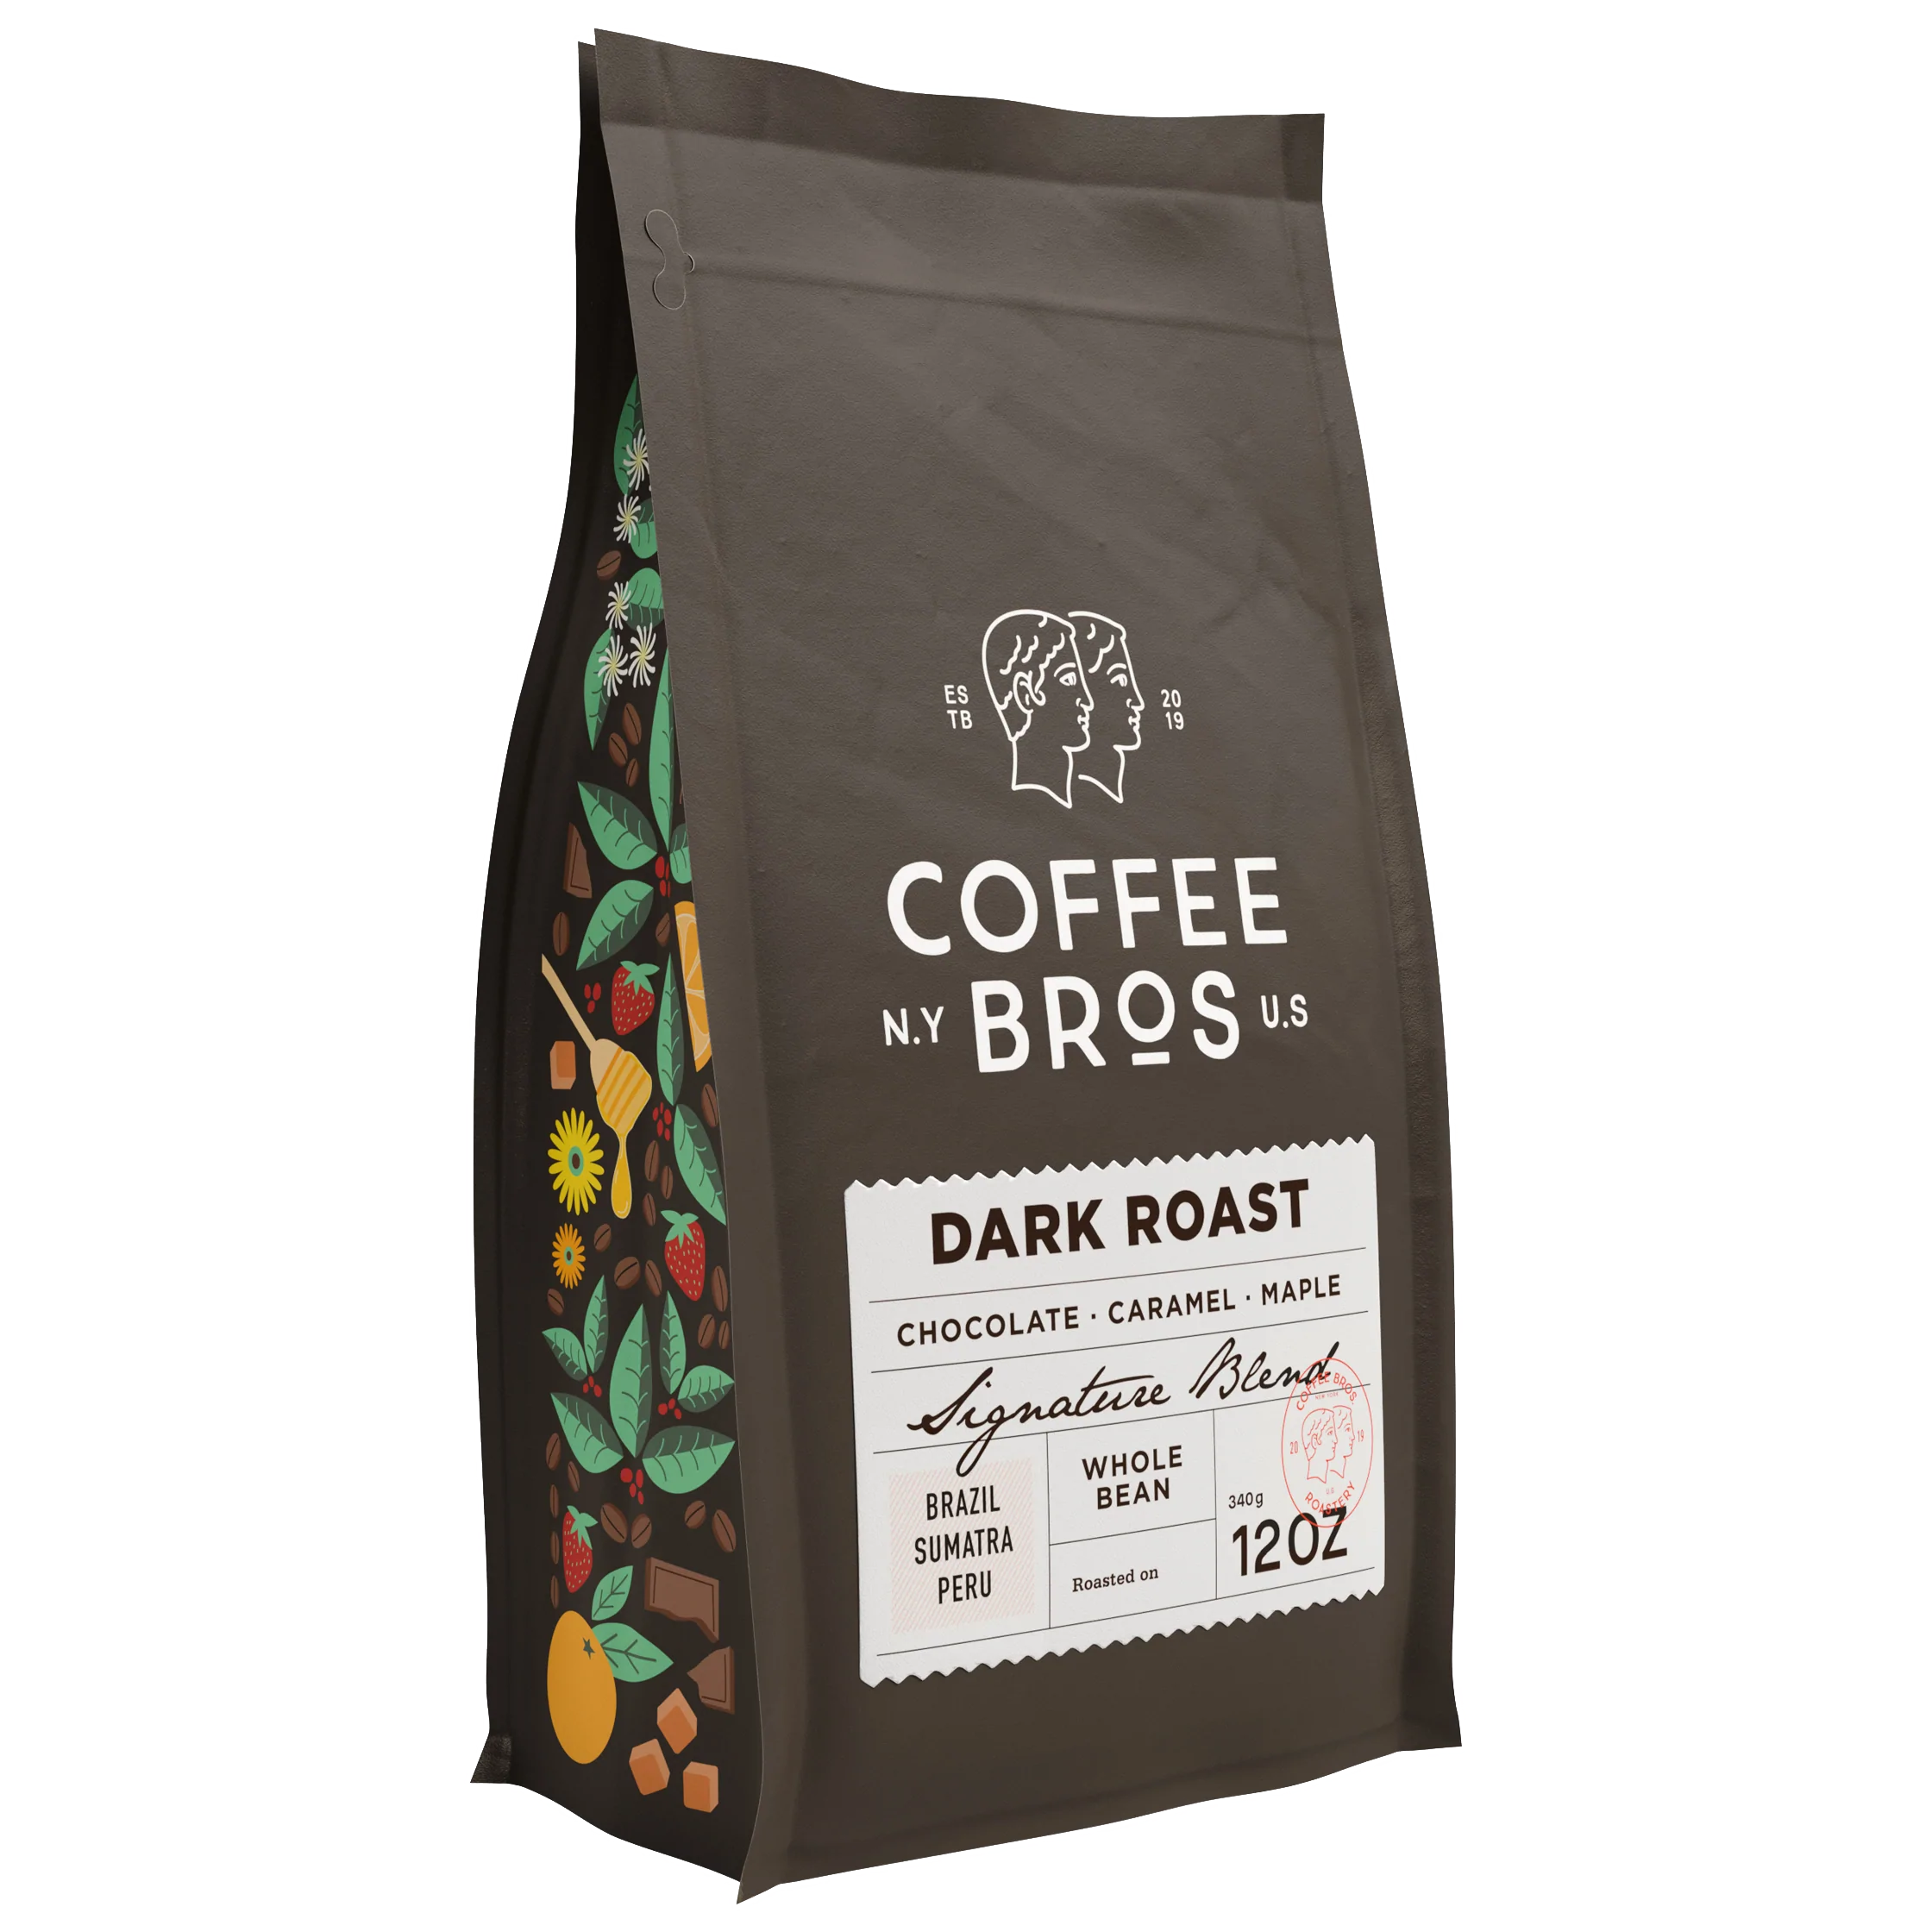 Dark Roast Coffee by Coffee Bros.